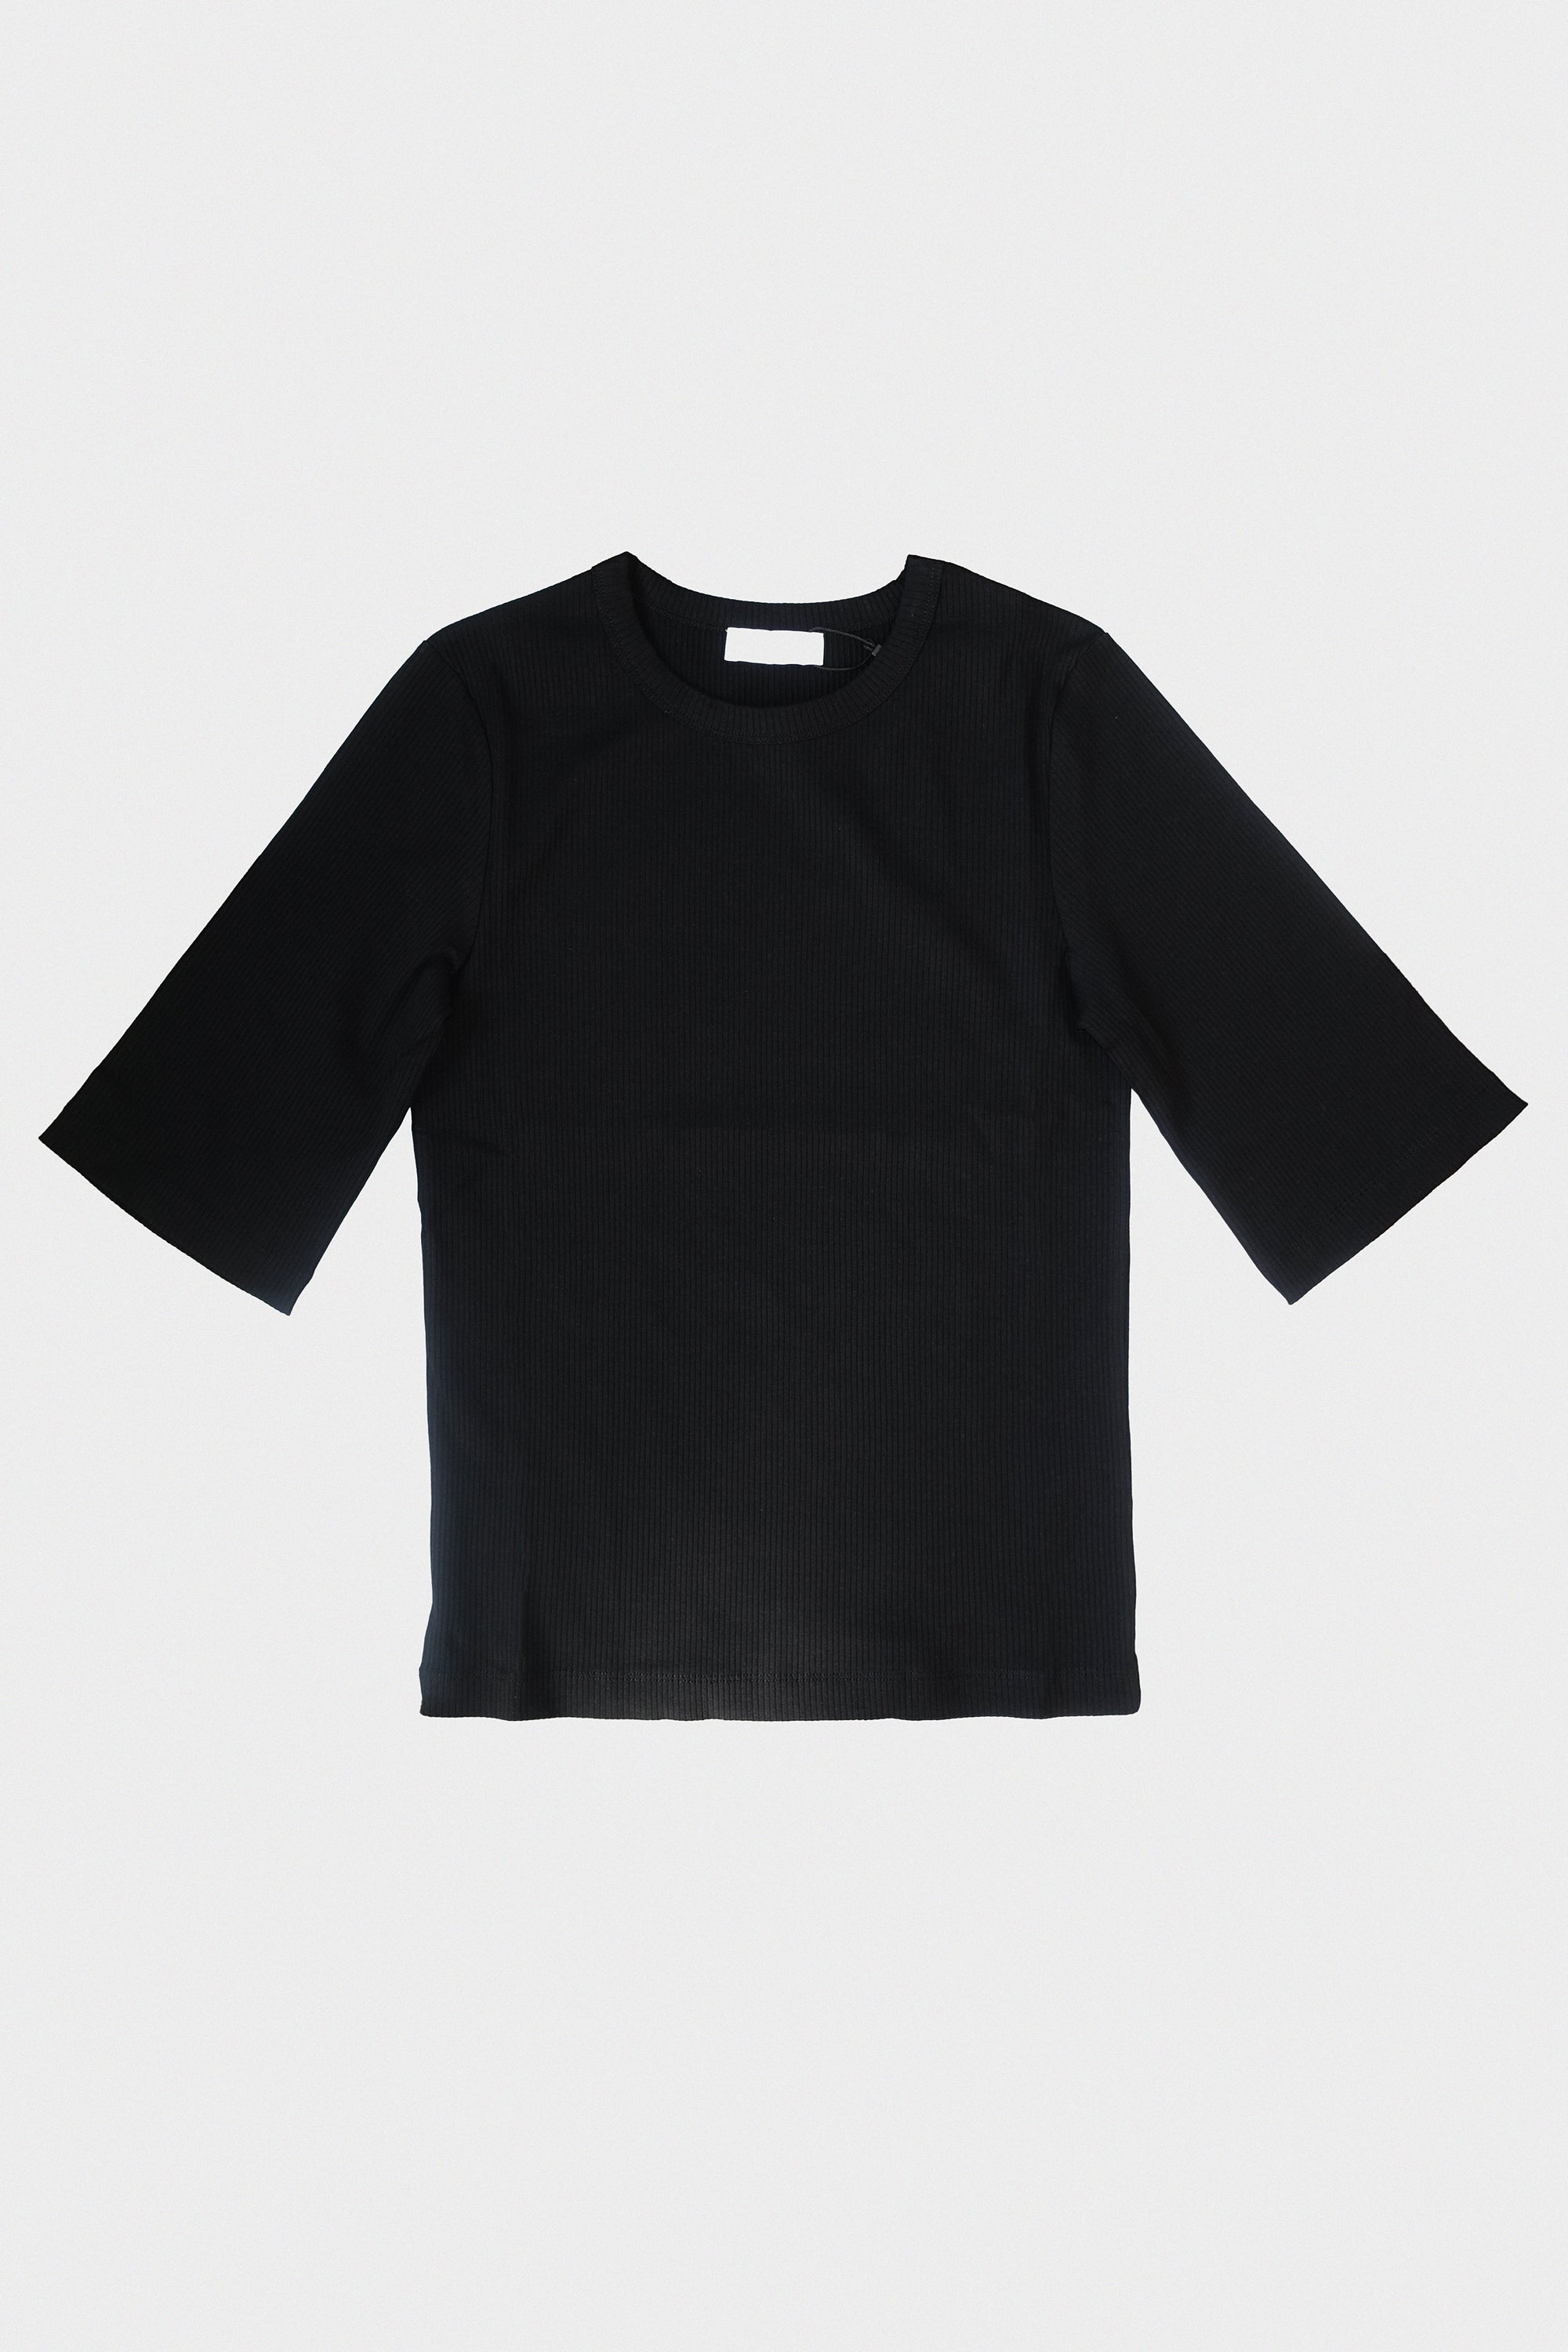 Sprint T-Shirt in Black Organic Cotton